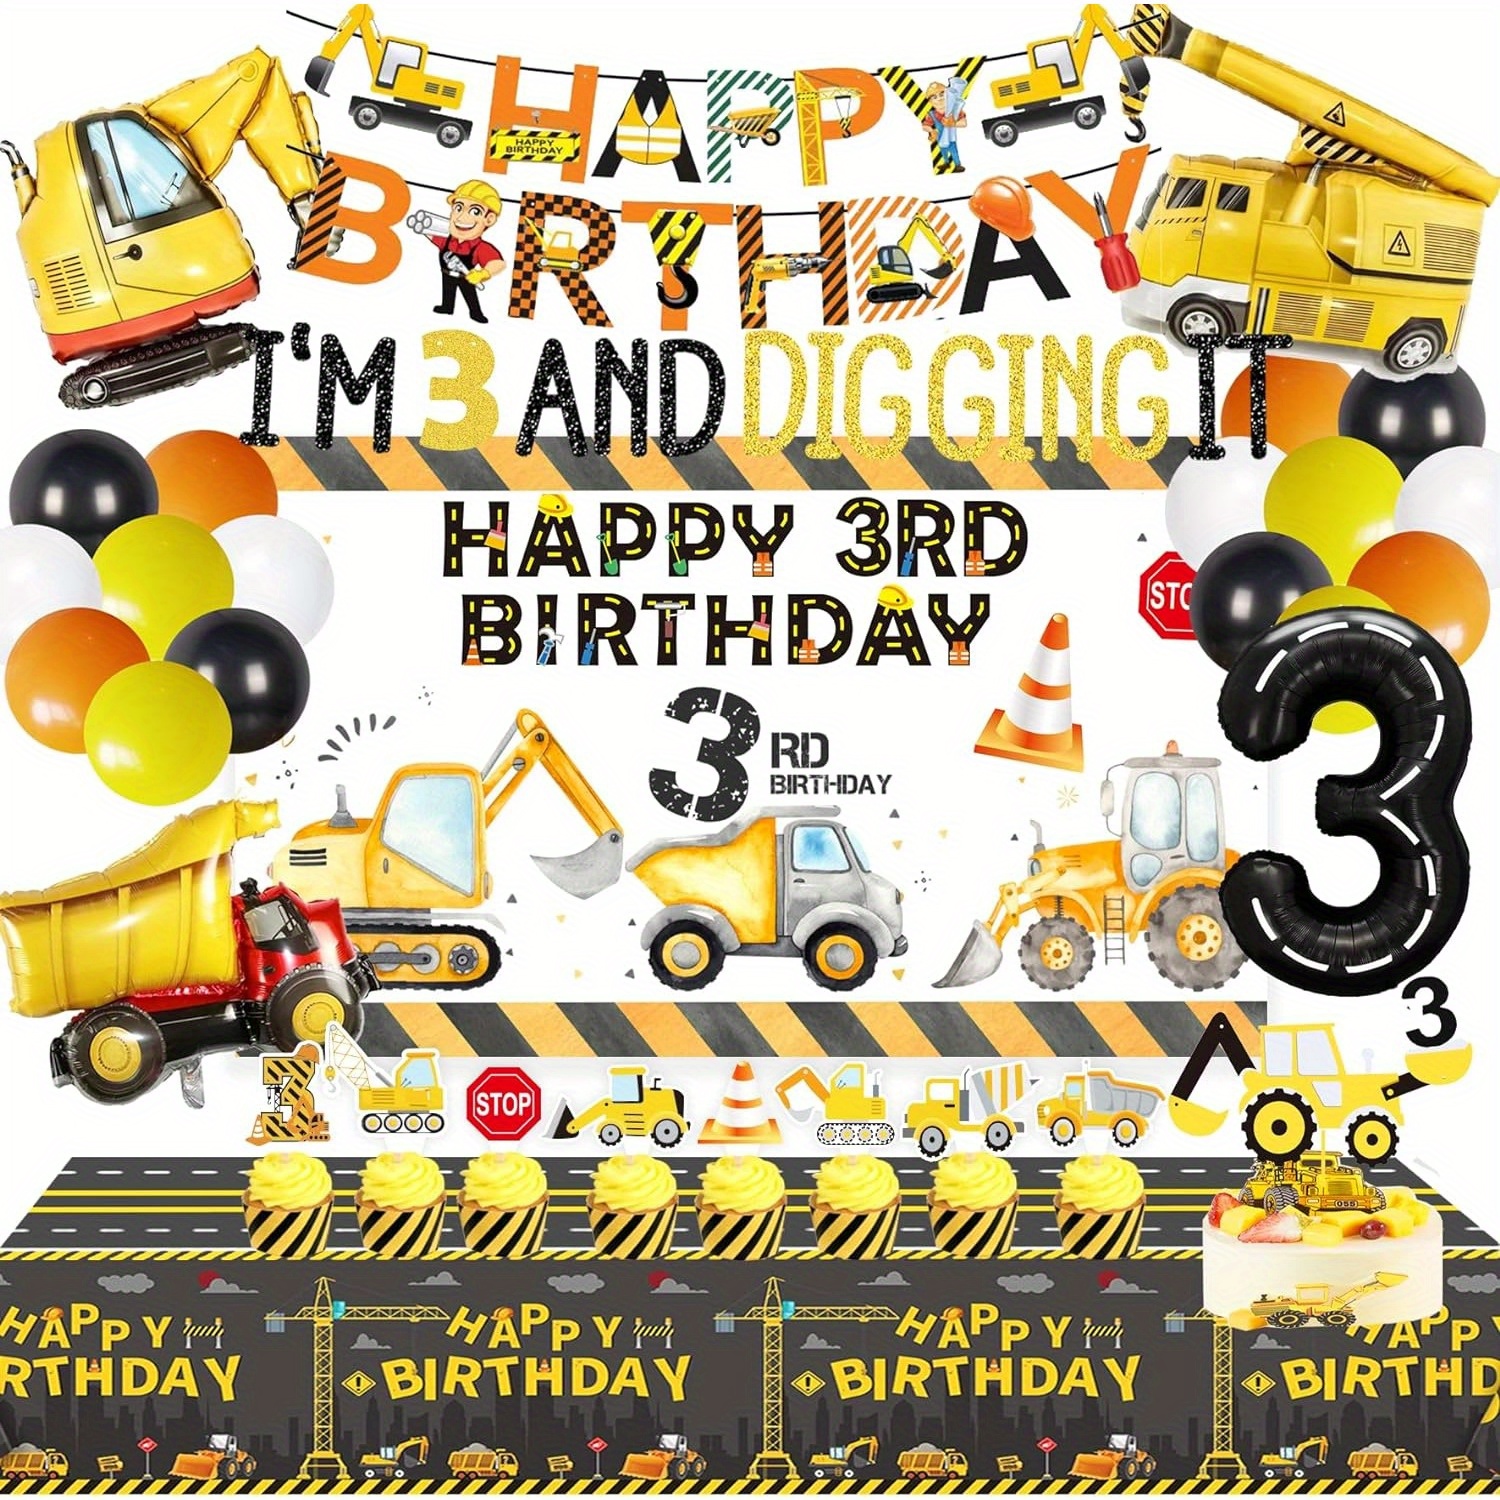 

90pcs Dump Truck Party Decorations. Construction 3rd Birthday Party Supplies, Construction 3rd Birthday Party Supplies, Construction 3rd Birthday Party Supplies Banner Balloon Set Excavator